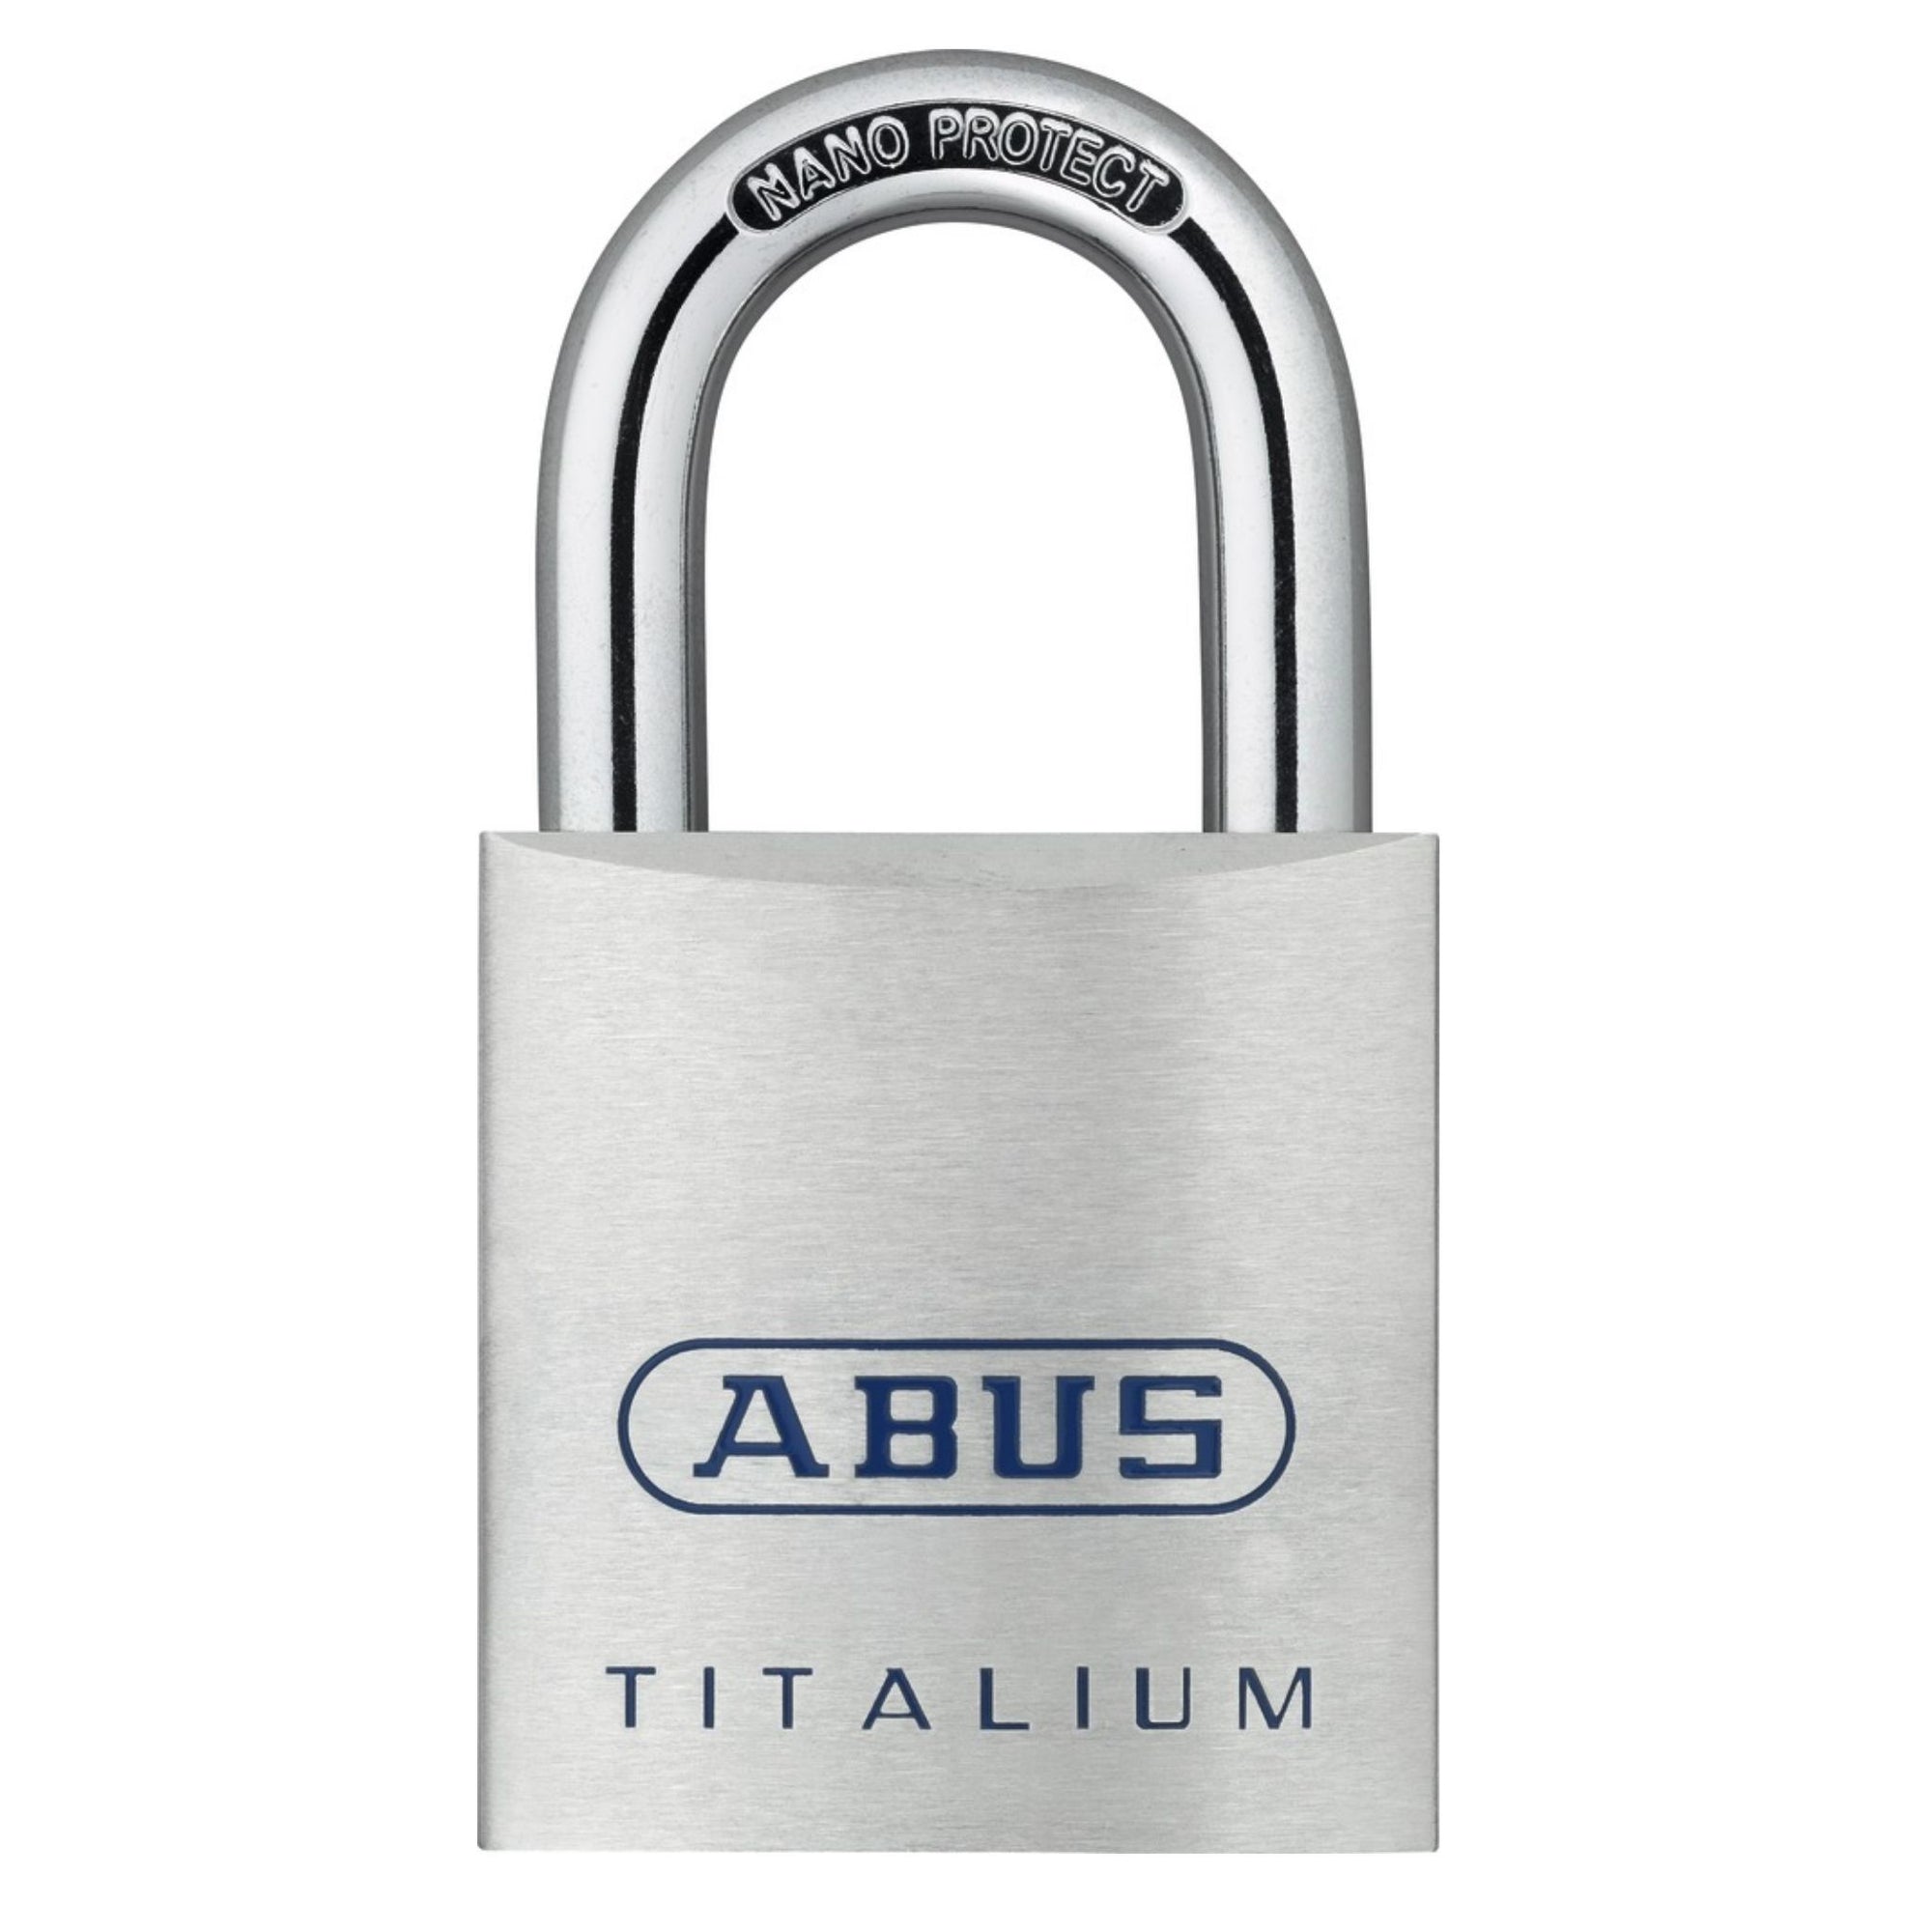 Abus 80TI/40 KA 8011 Titalium Padlock Keyed Alike to Match Existing Key Number KA8011 - The Lock Source